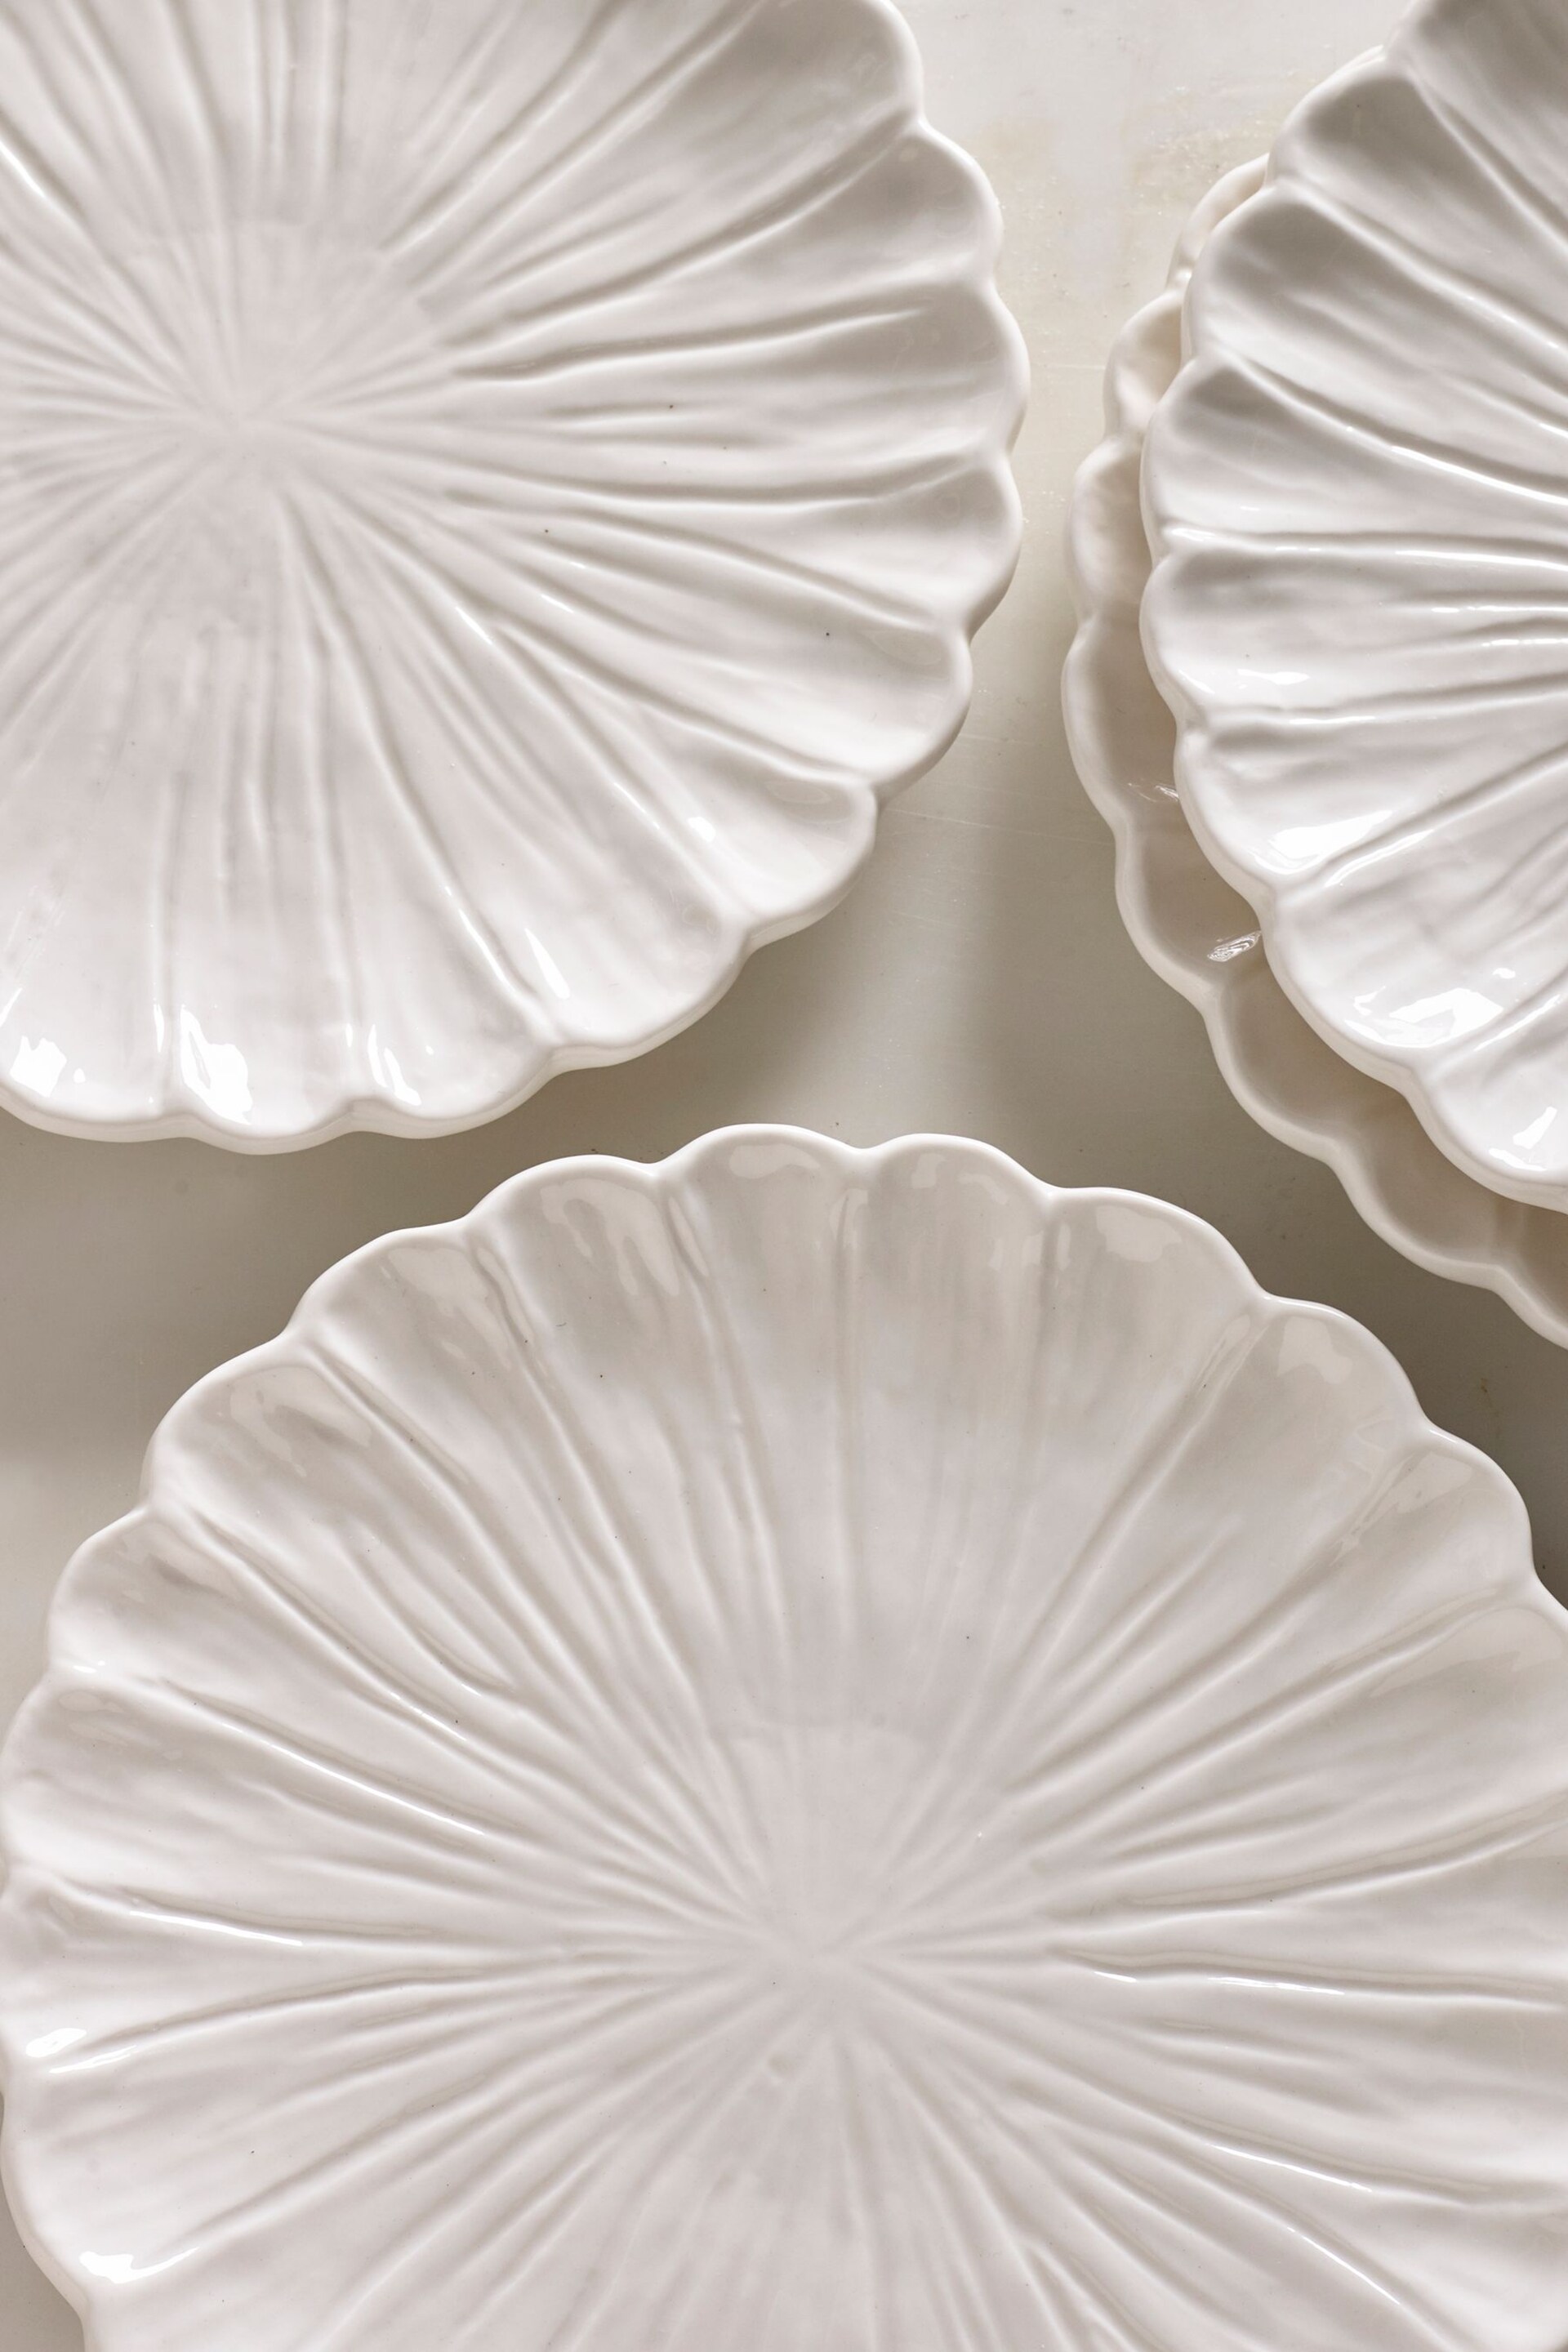 White Set of 4 Flower Side Plates - Image 3 of 6